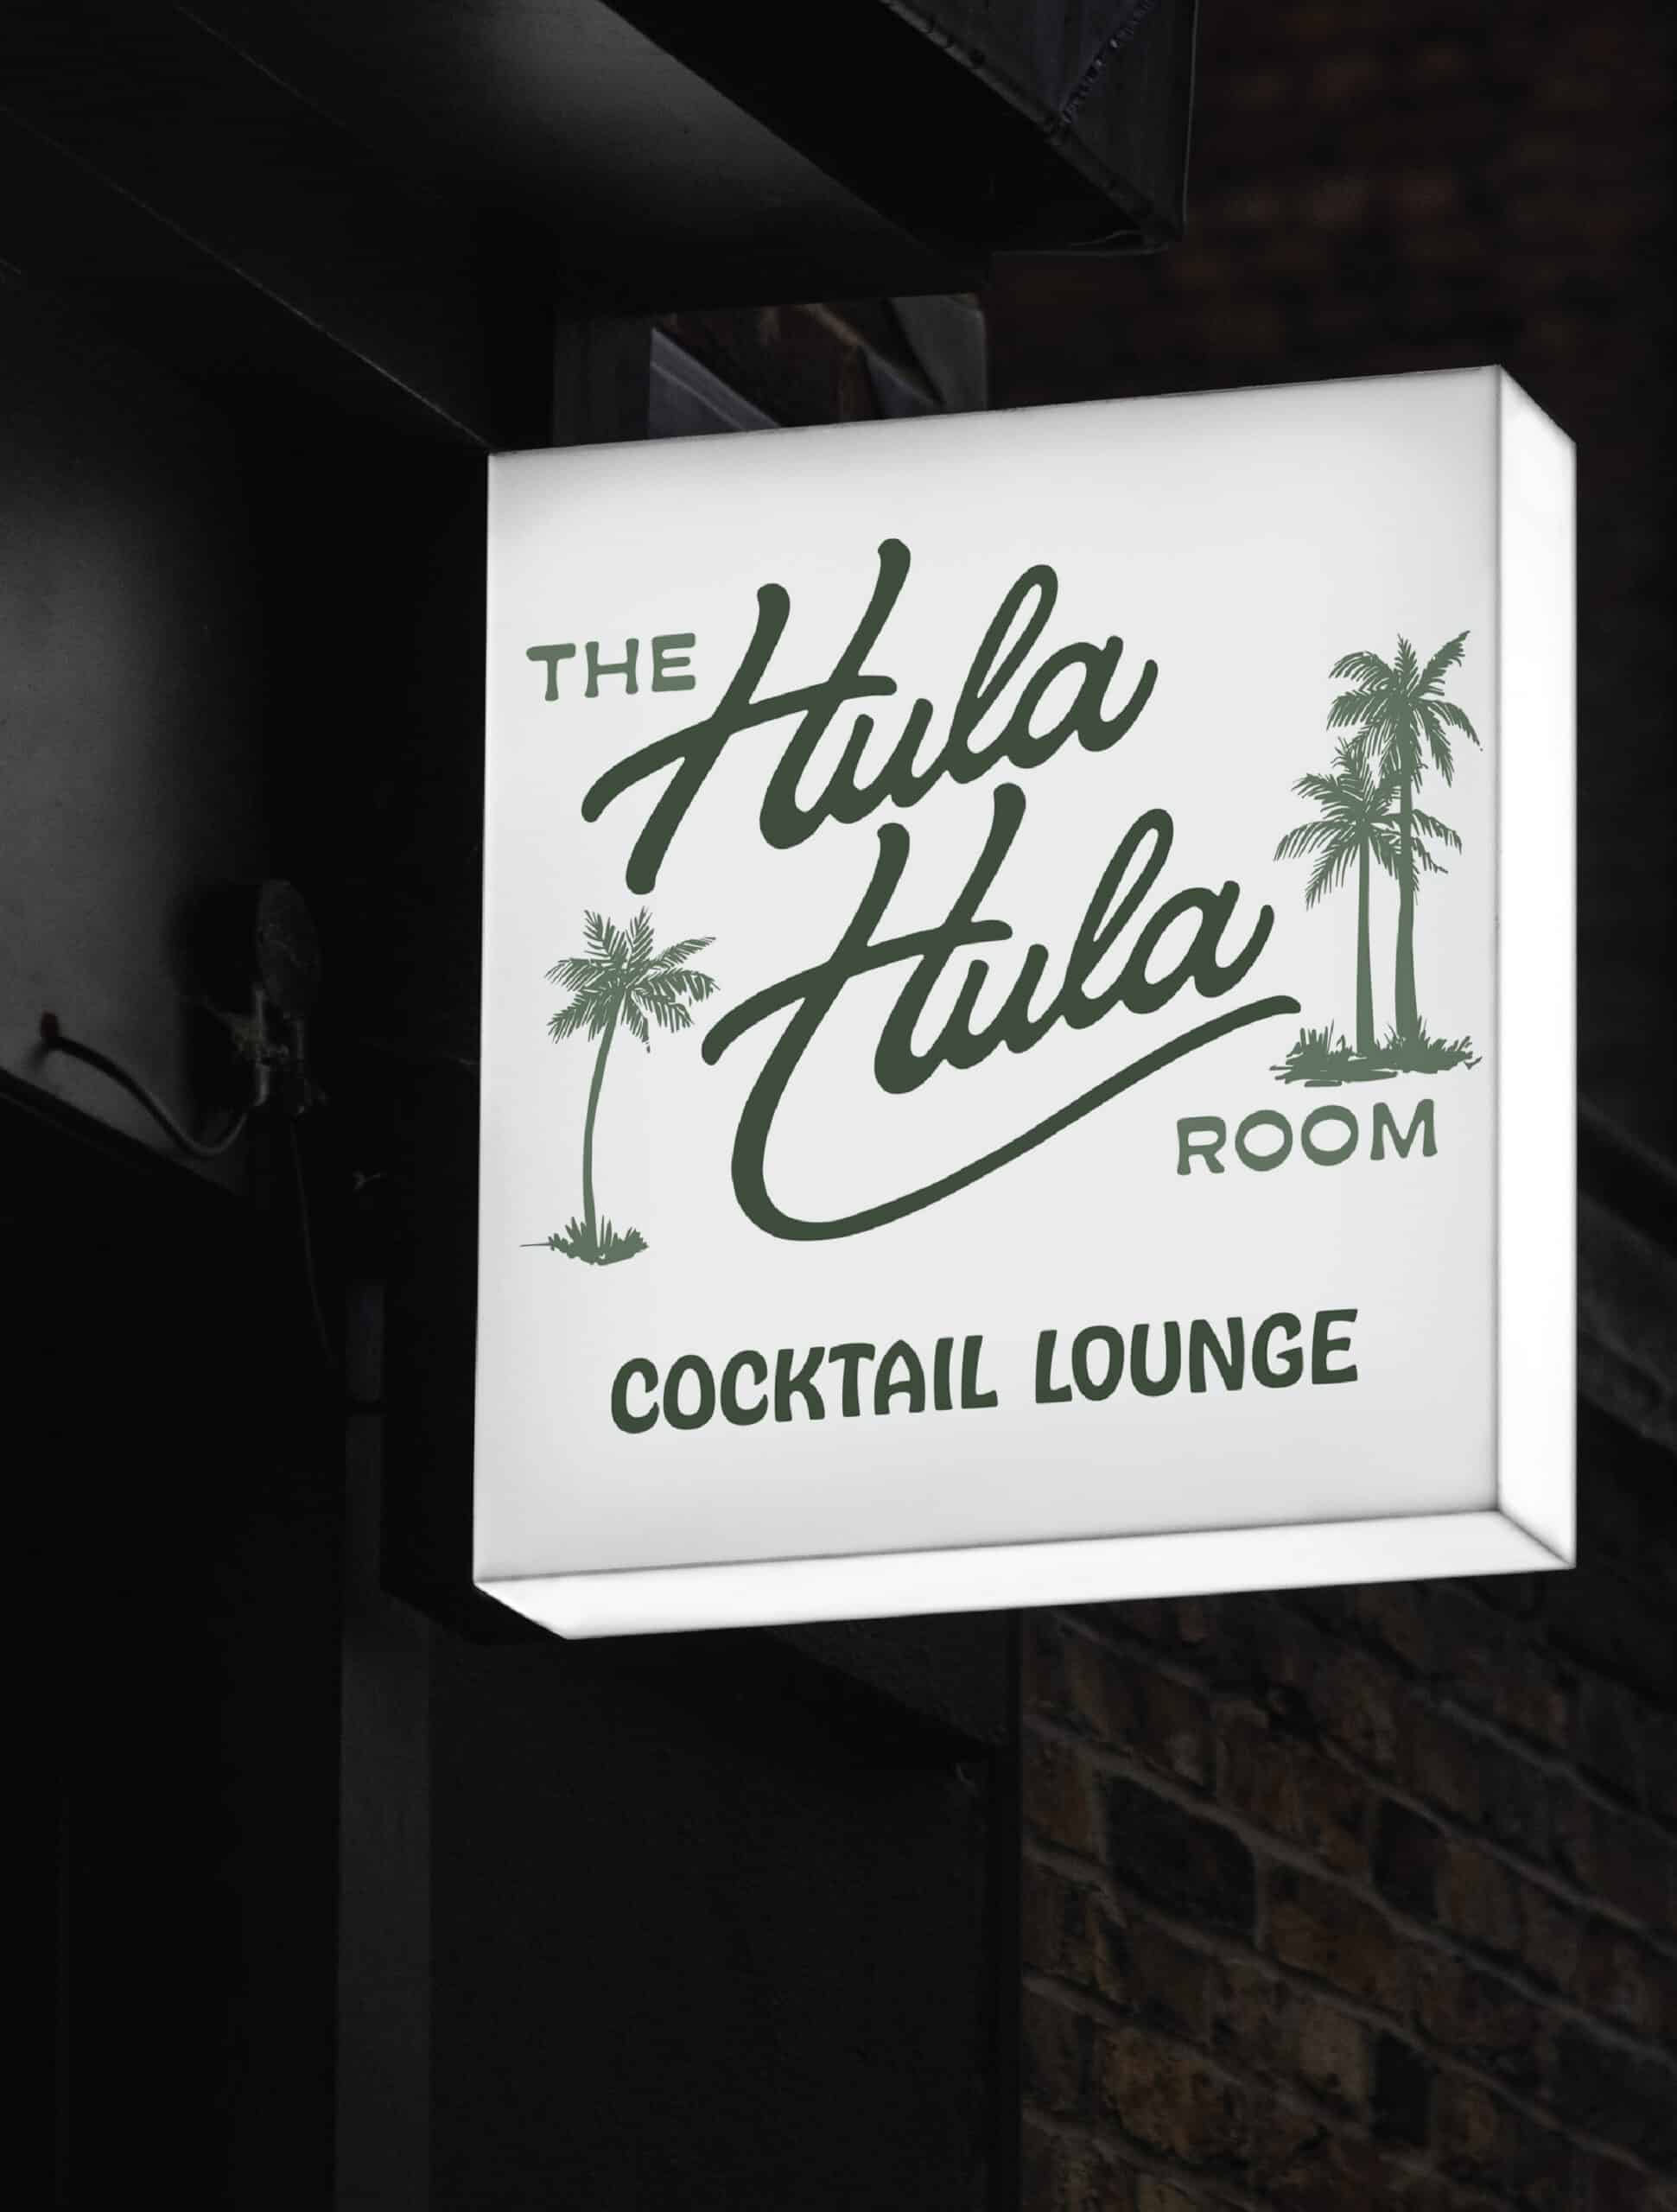 The Hula Hula Room in Torrance California Tiki Bar Branding by Stellen Design branding and logo design agency in Los Angeles specializing in hospitality branding custom script logo design light box design